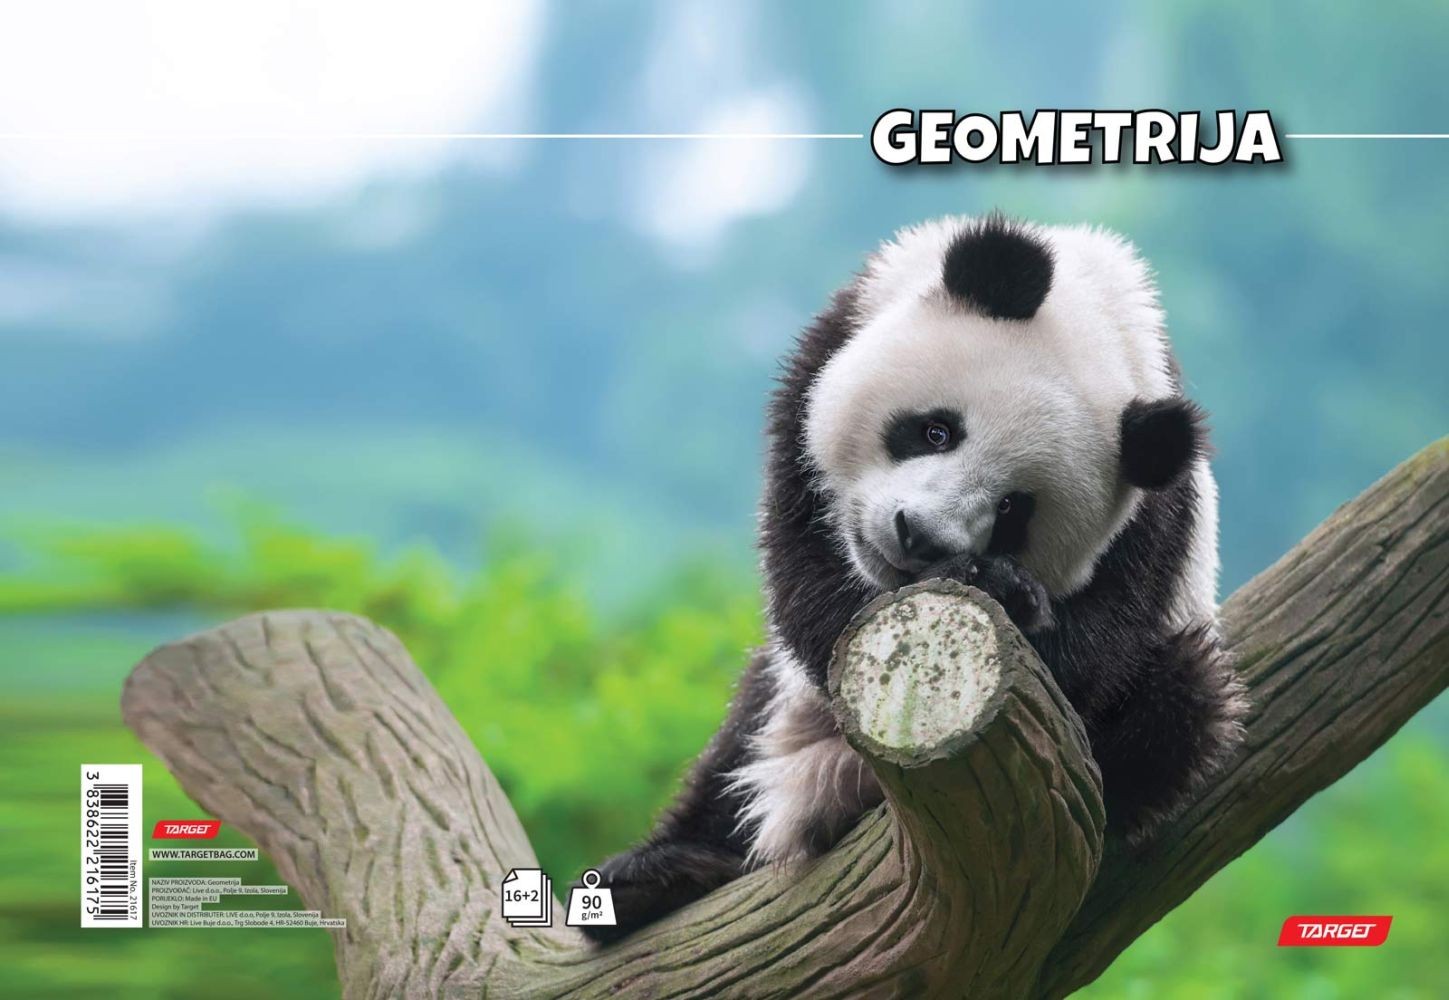 Geometrija Target Panda